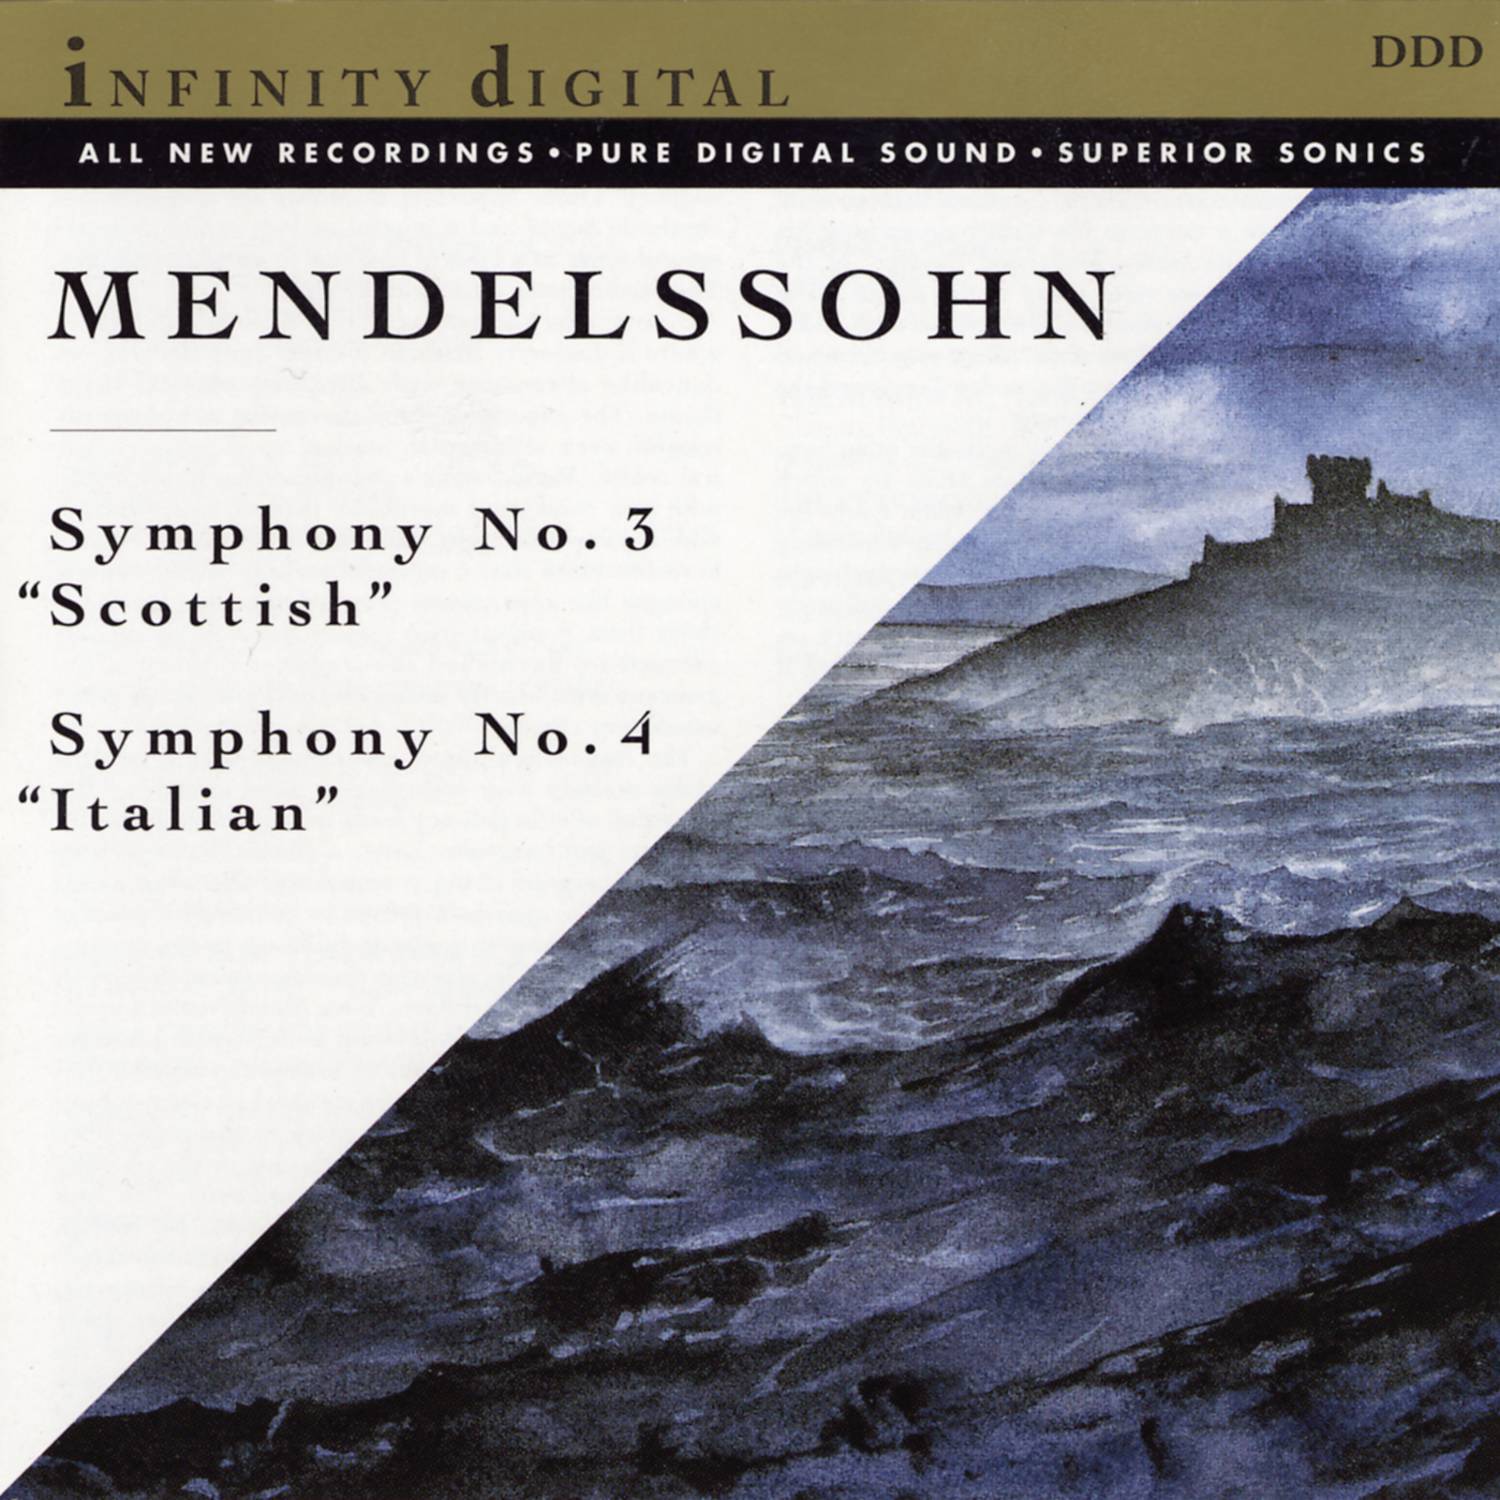 Mendelssohn: "Scottish" & "Italian" Symphonies